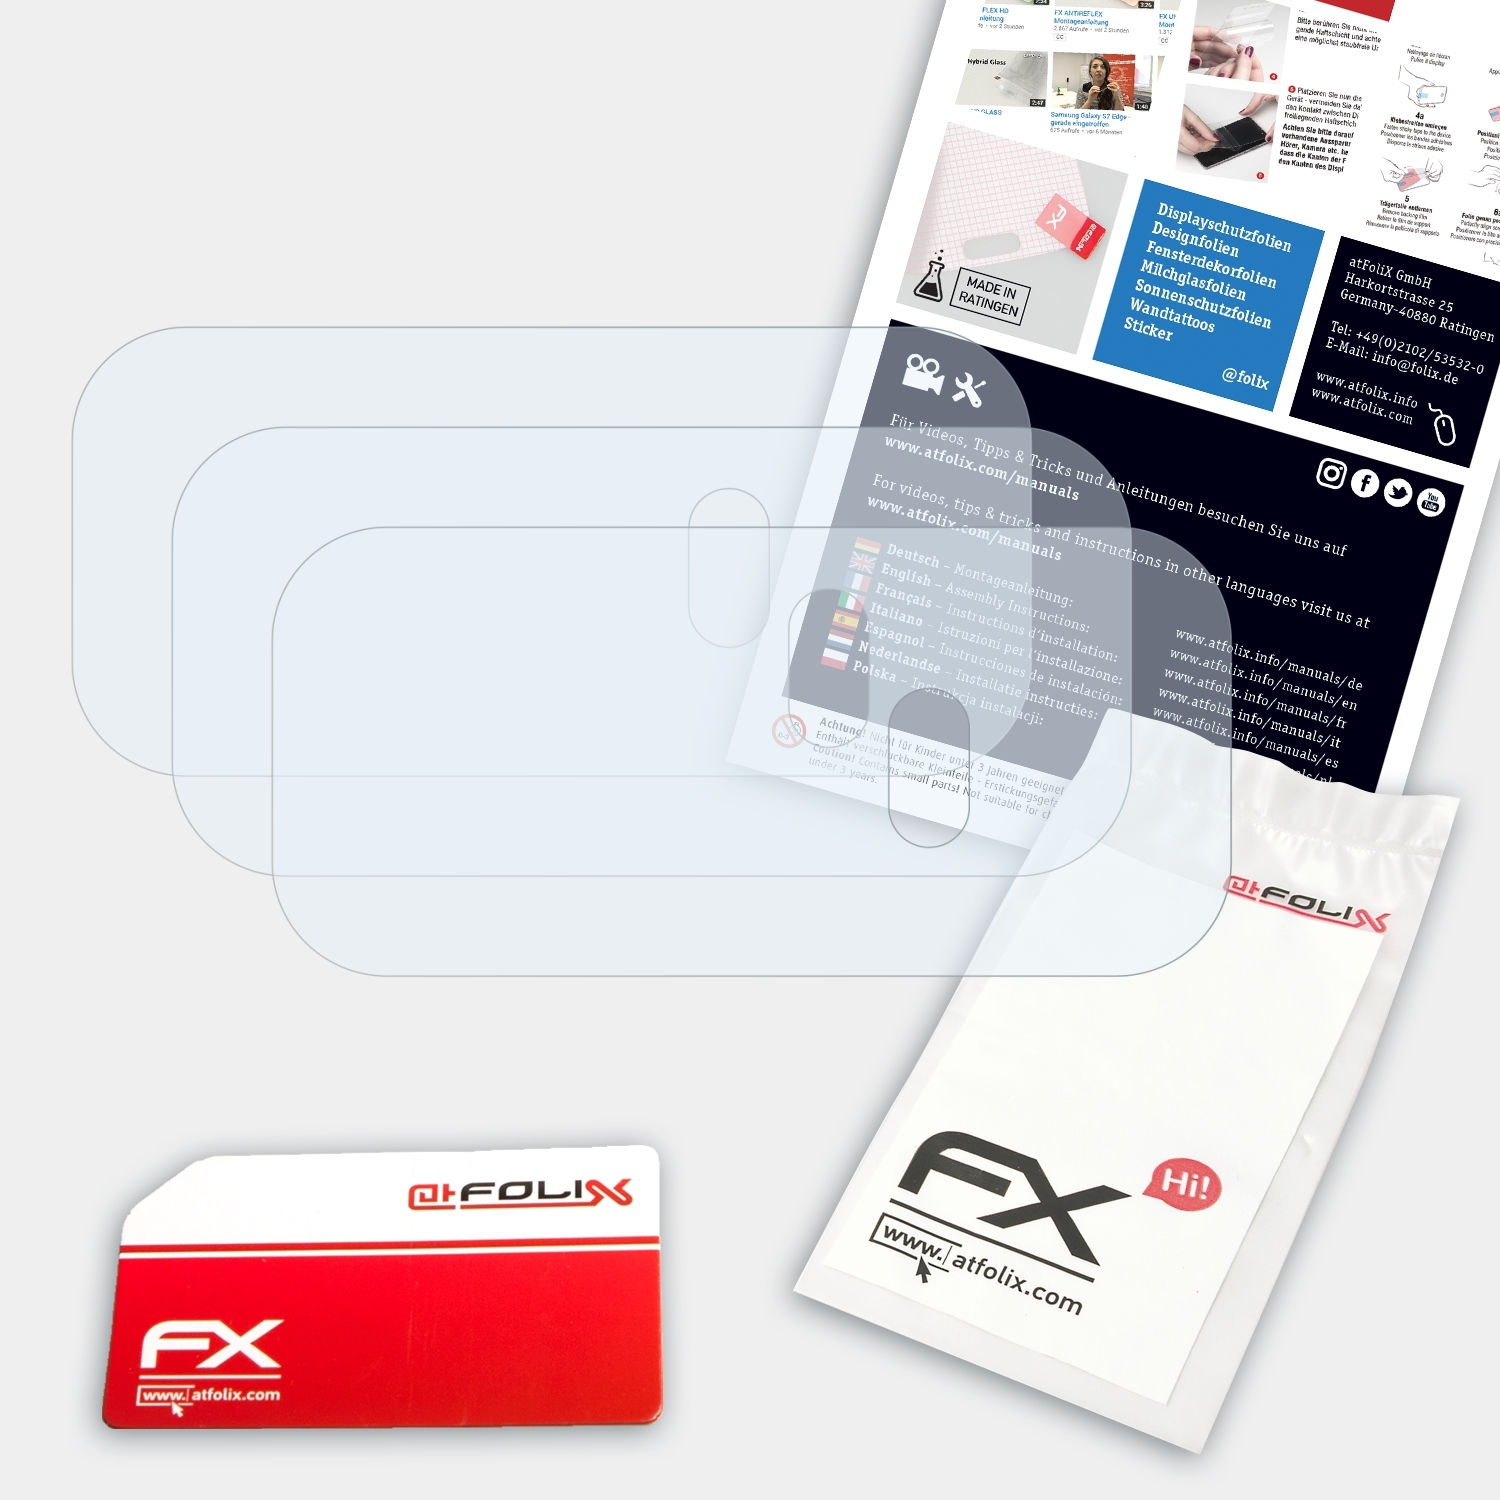 ATFOLIX 3x FX-Clear Displayschutz(für Asus Flip ZenFone 8 (Lens))